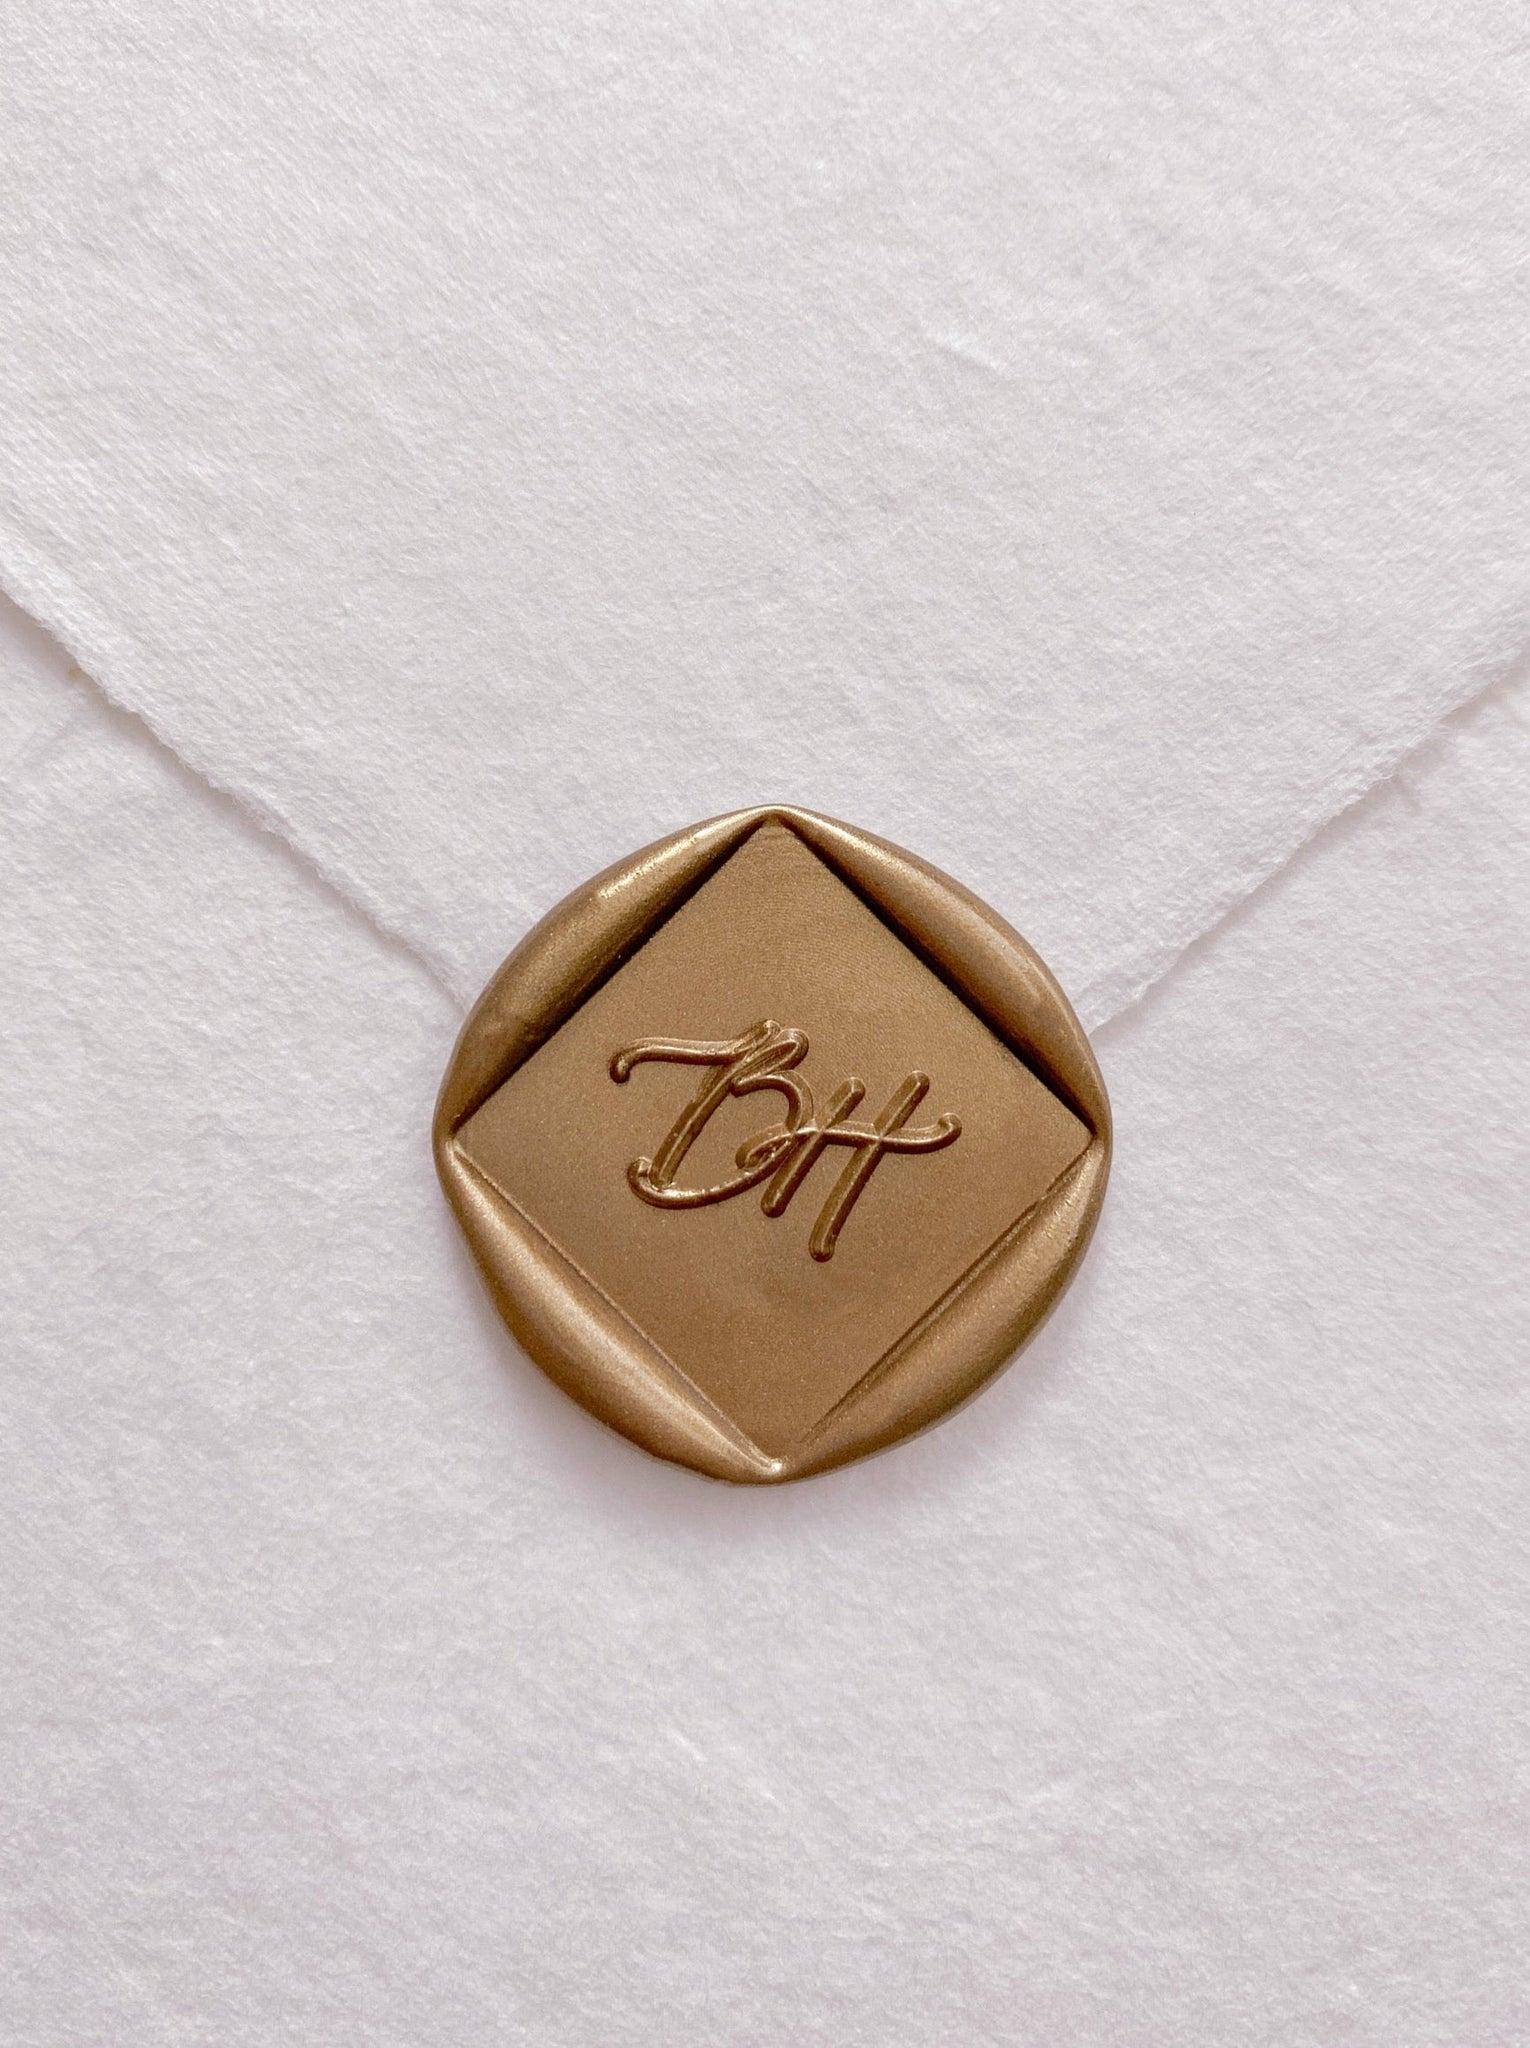 Calligraphy script monogram diamond shaped wax seal in gold on handmade paper envelope